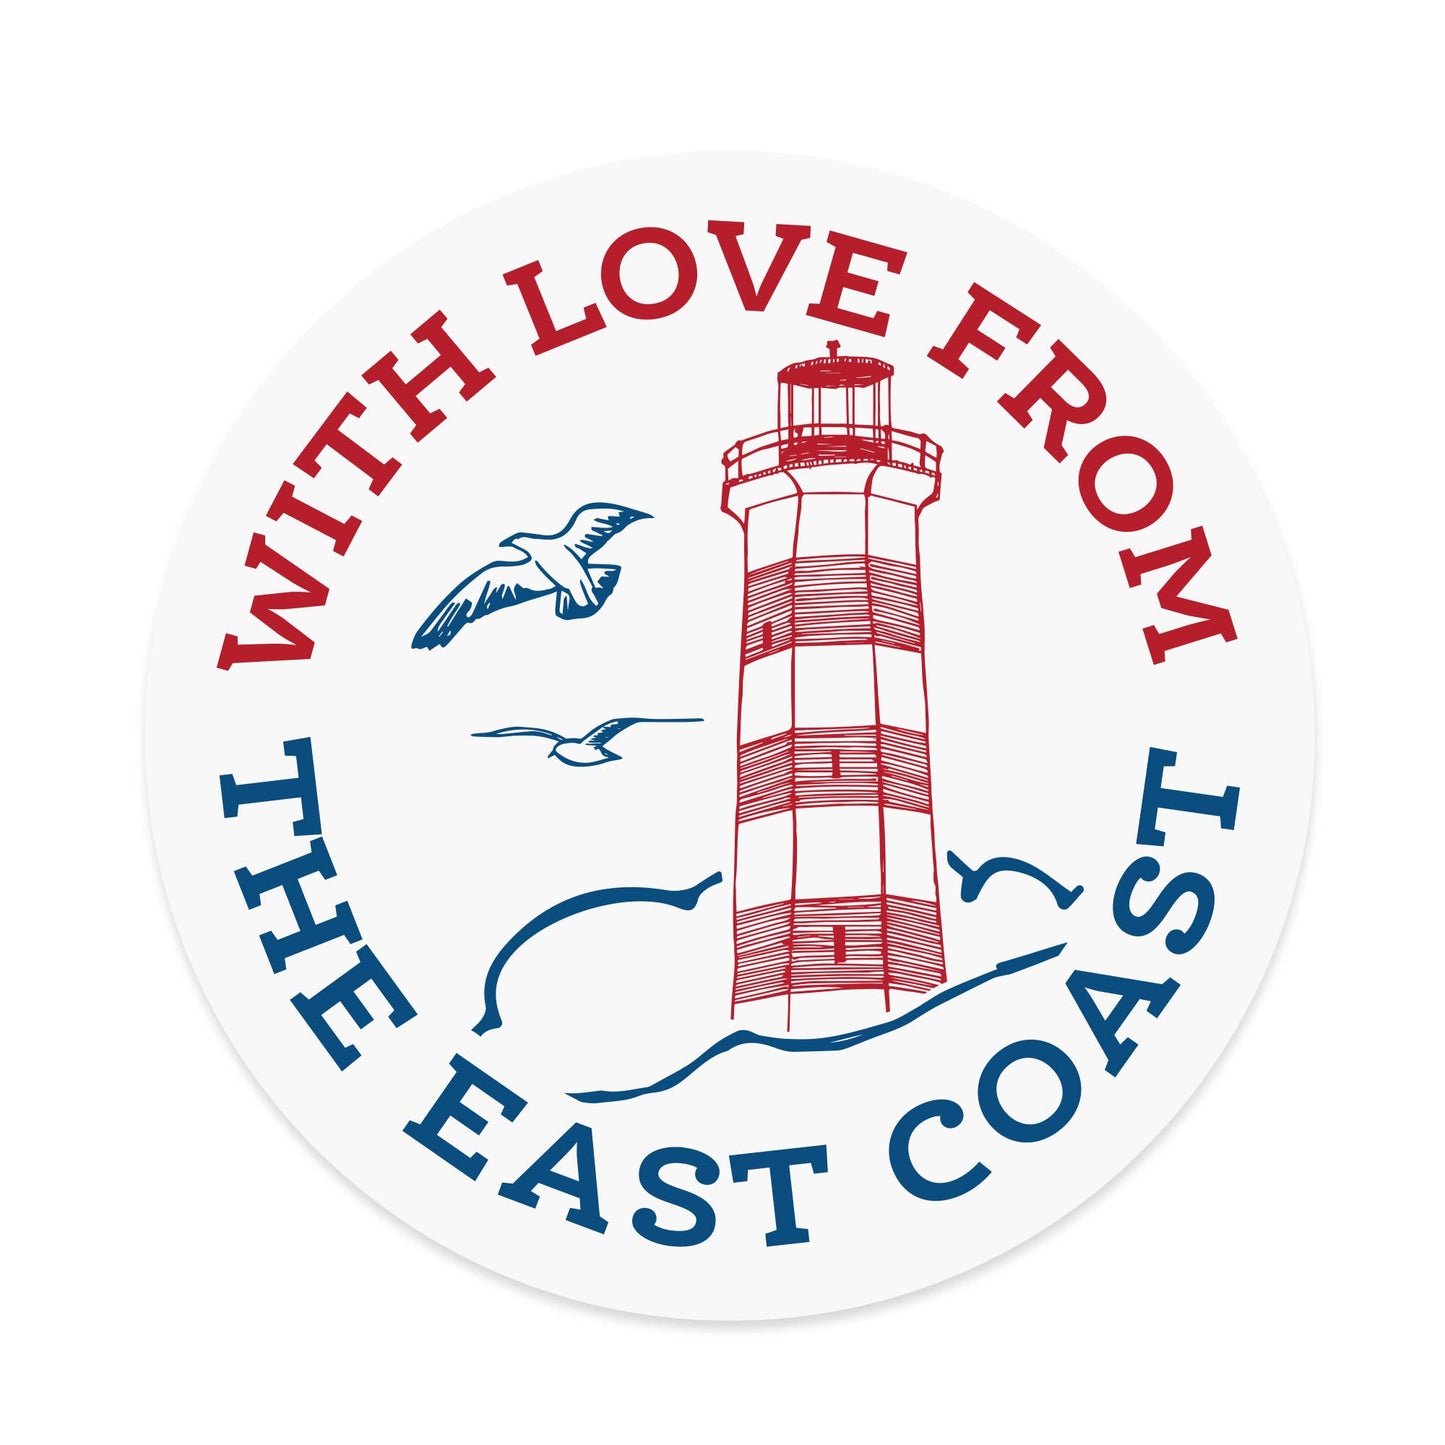 East Coast Love Card / Sticker